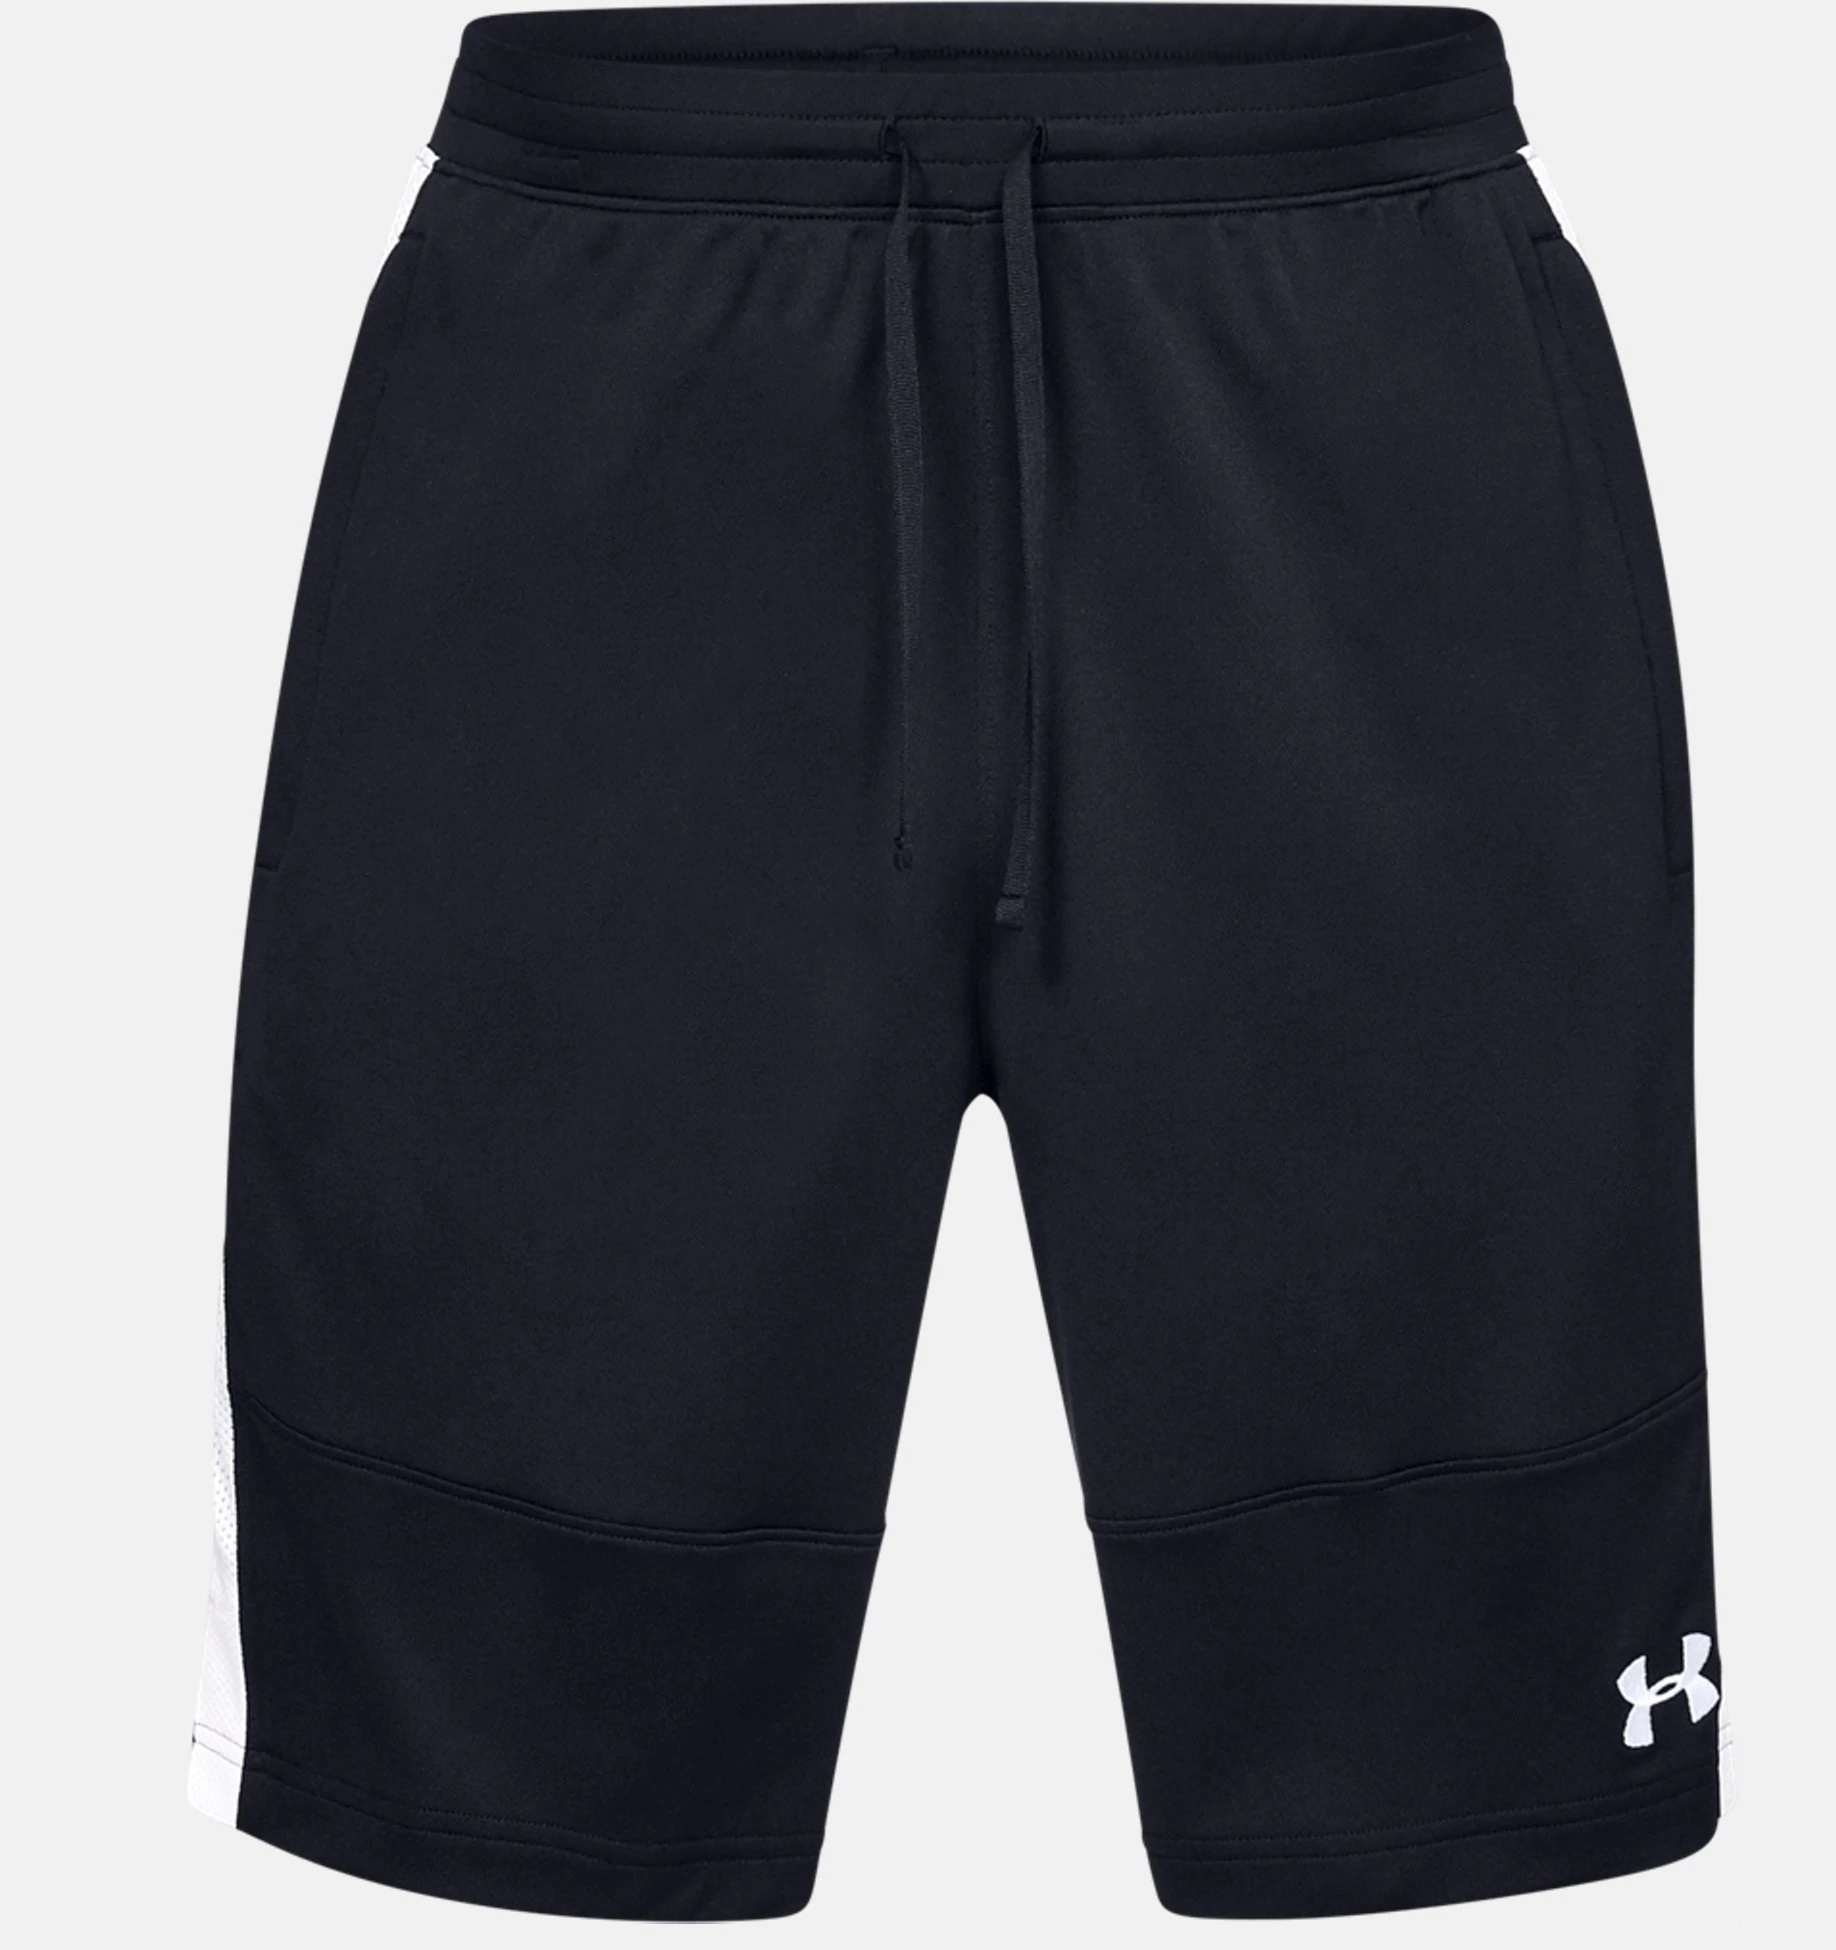 Shorts -  under armour UA Sportstyle Pique Shorts 9295